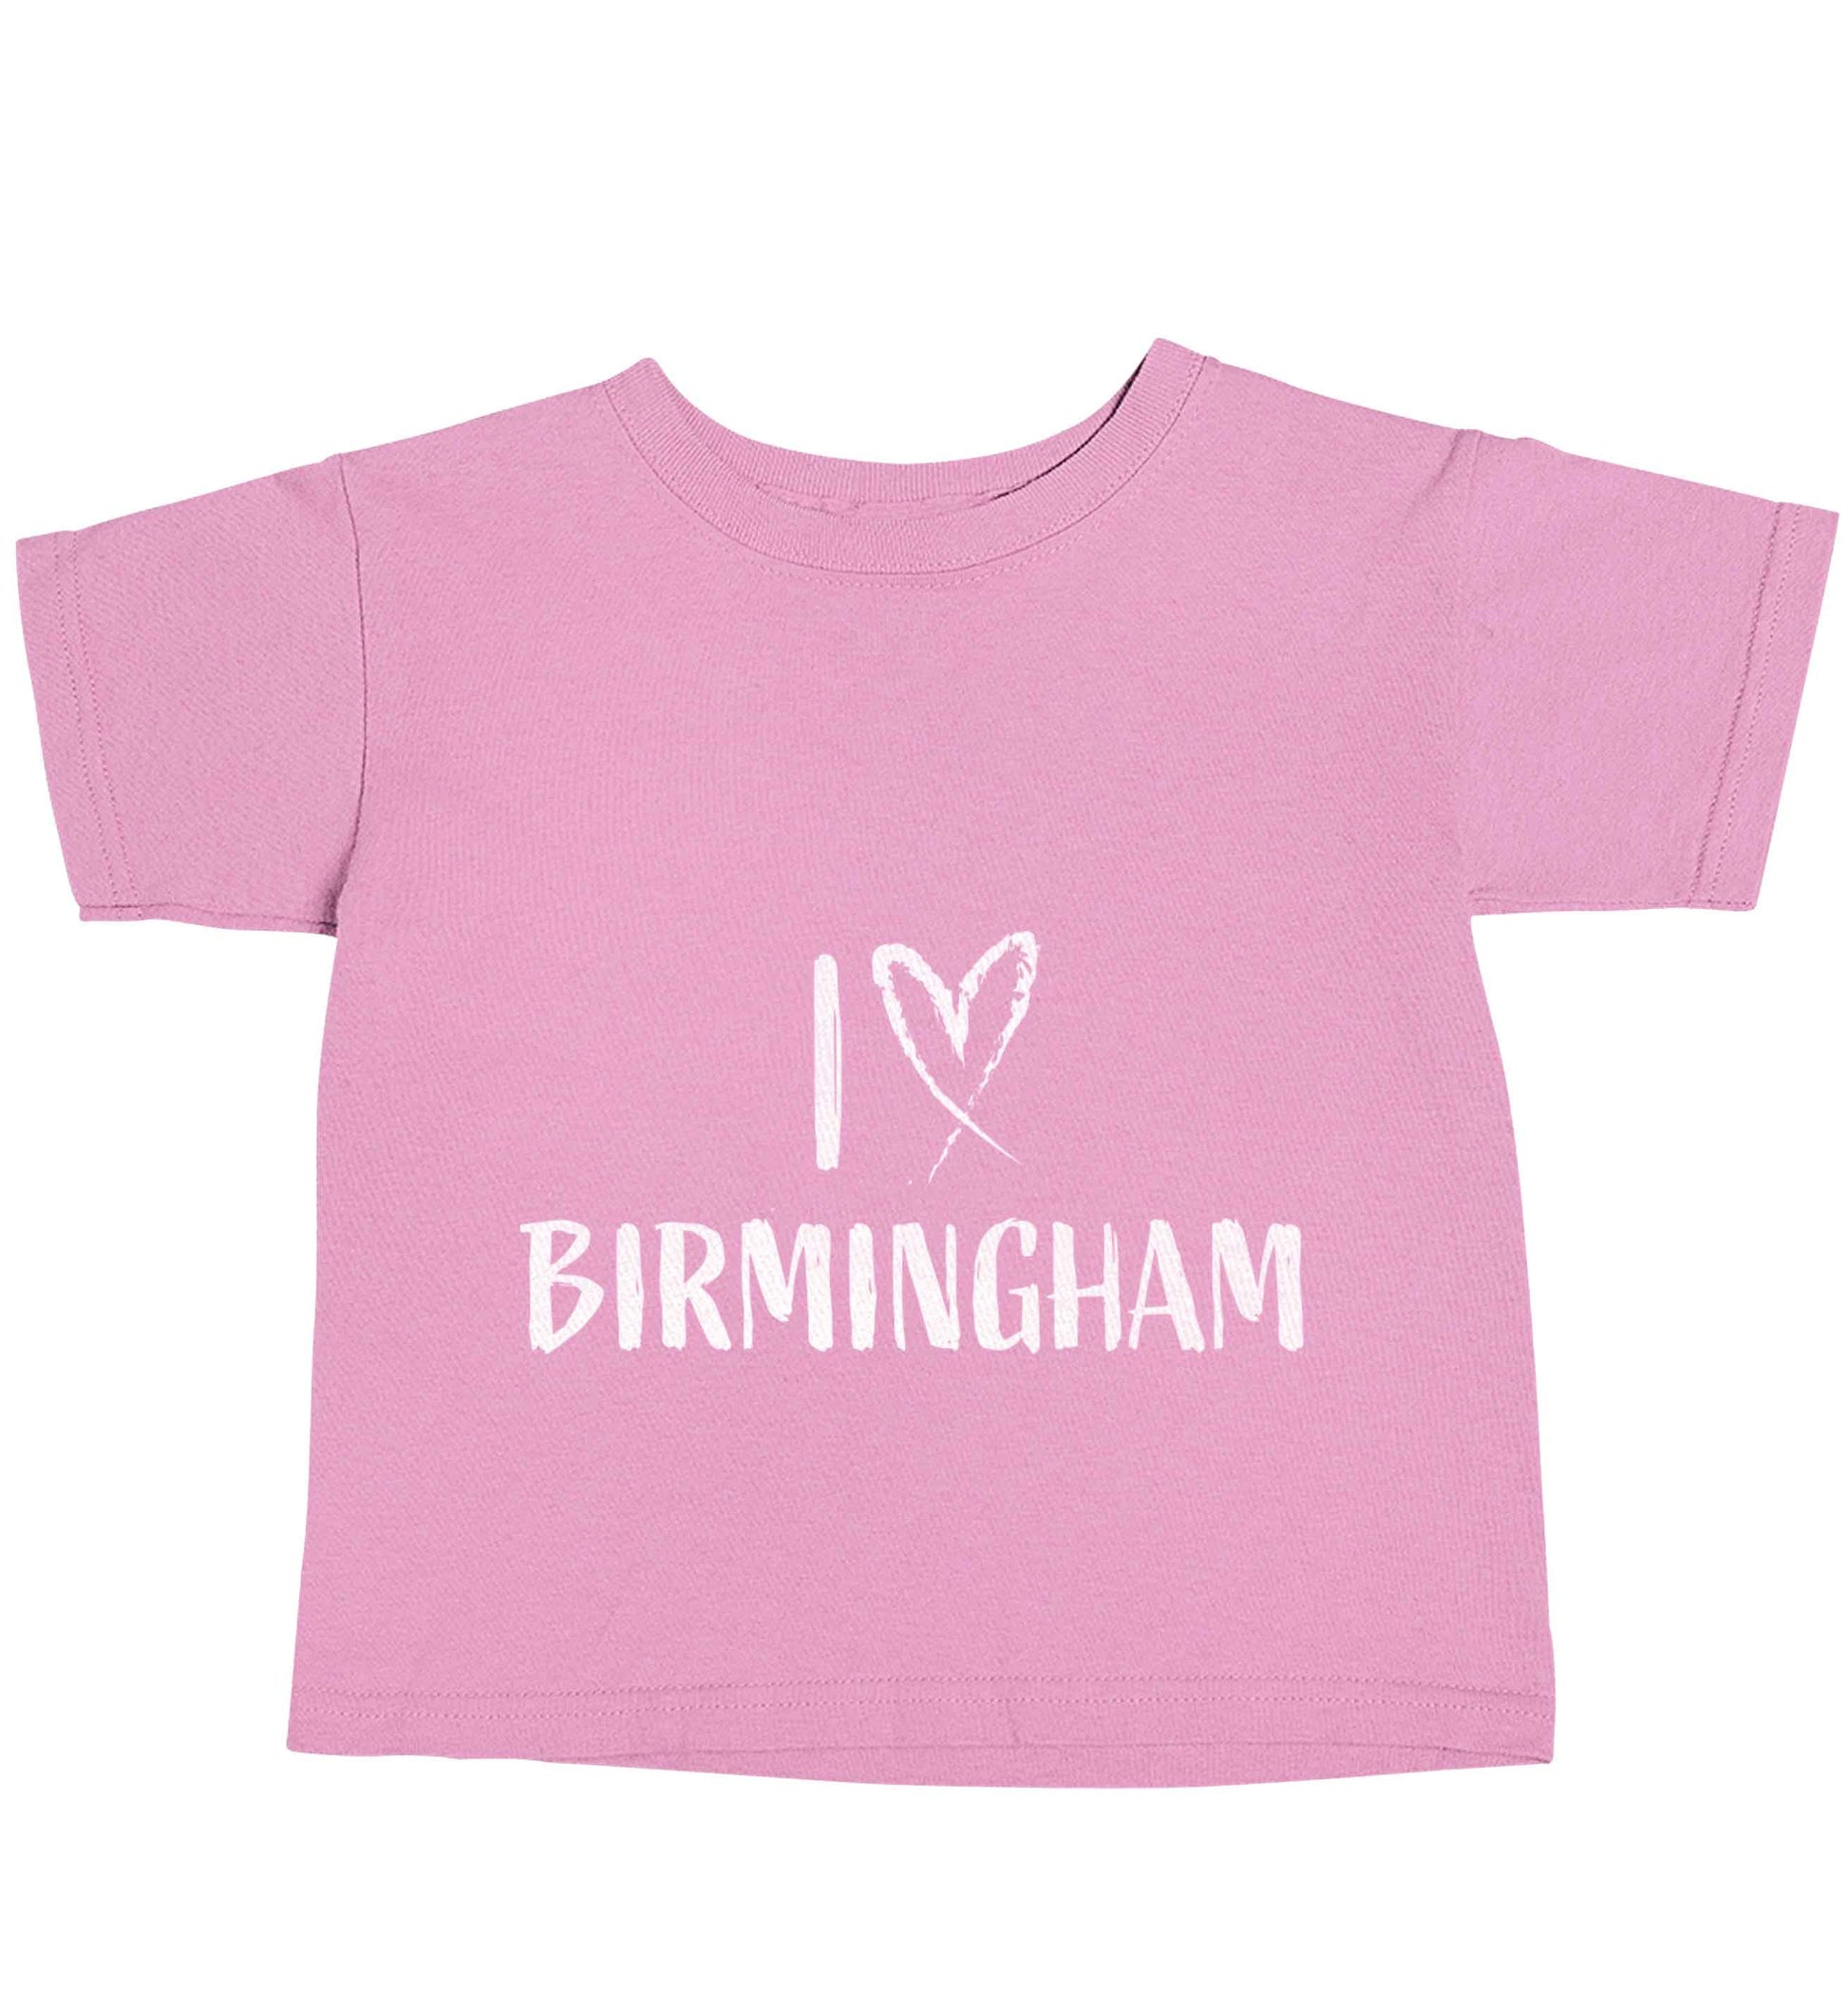 I love Birmingham light pink baby toddler Tshirt 2 Years